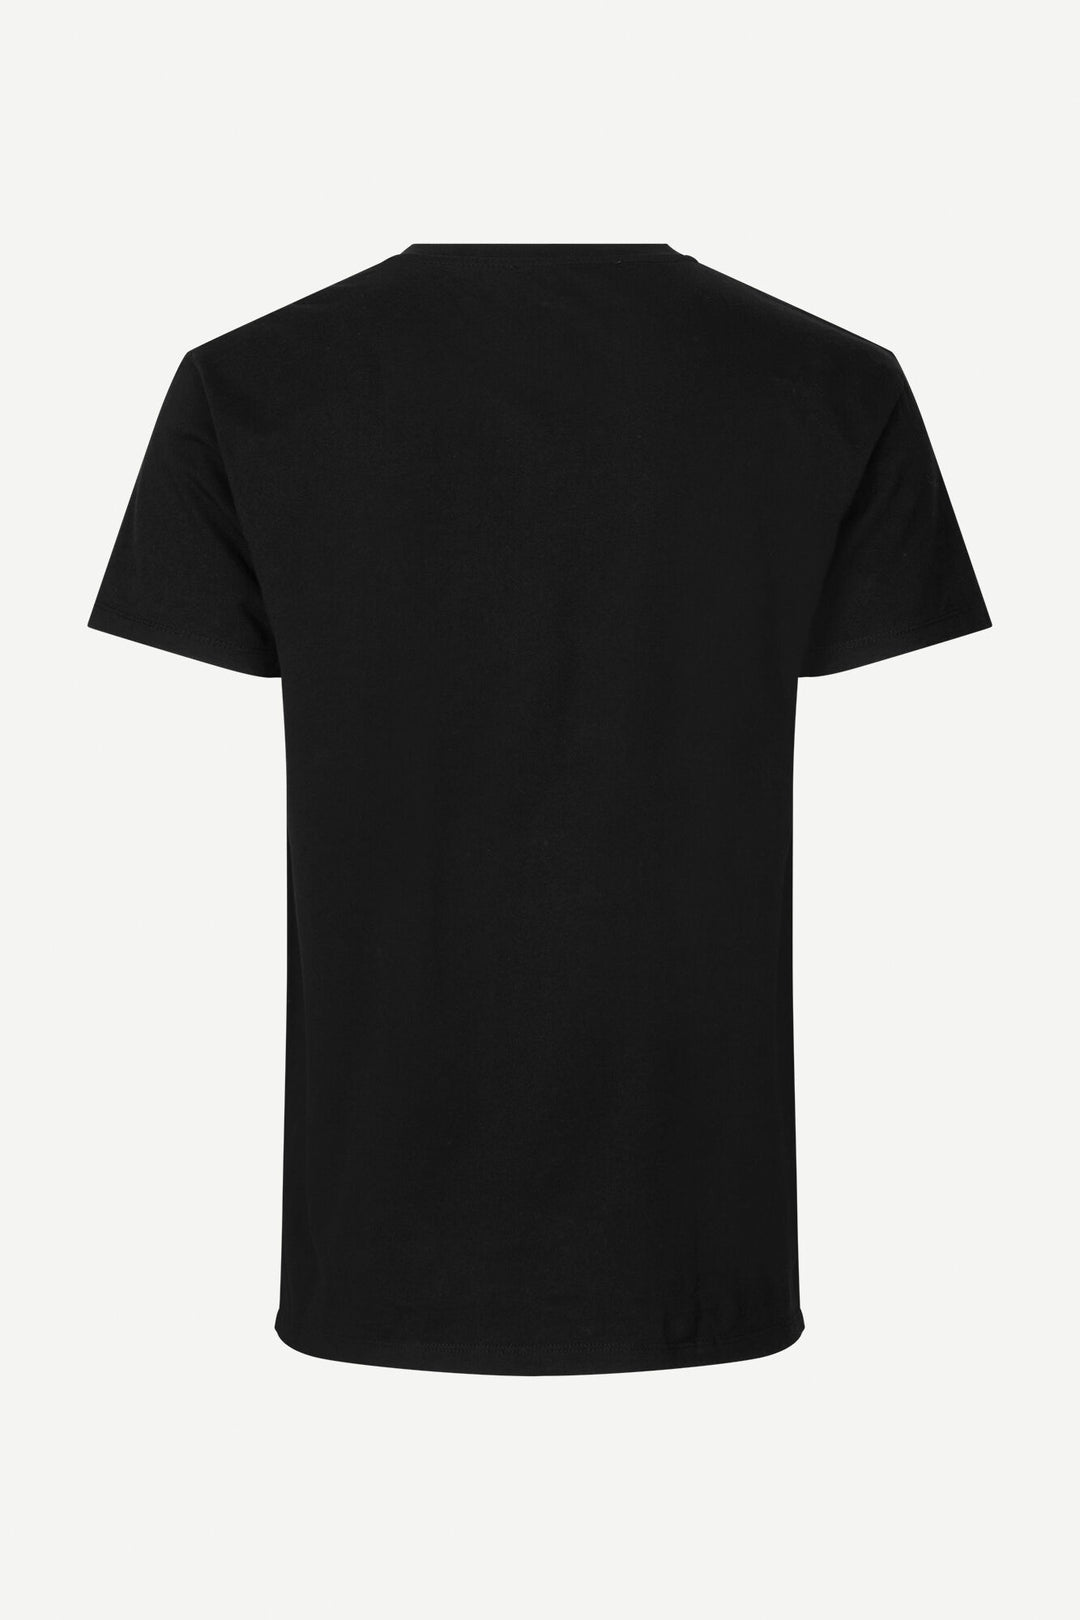 Kronos V-Neck T-Shirt Black